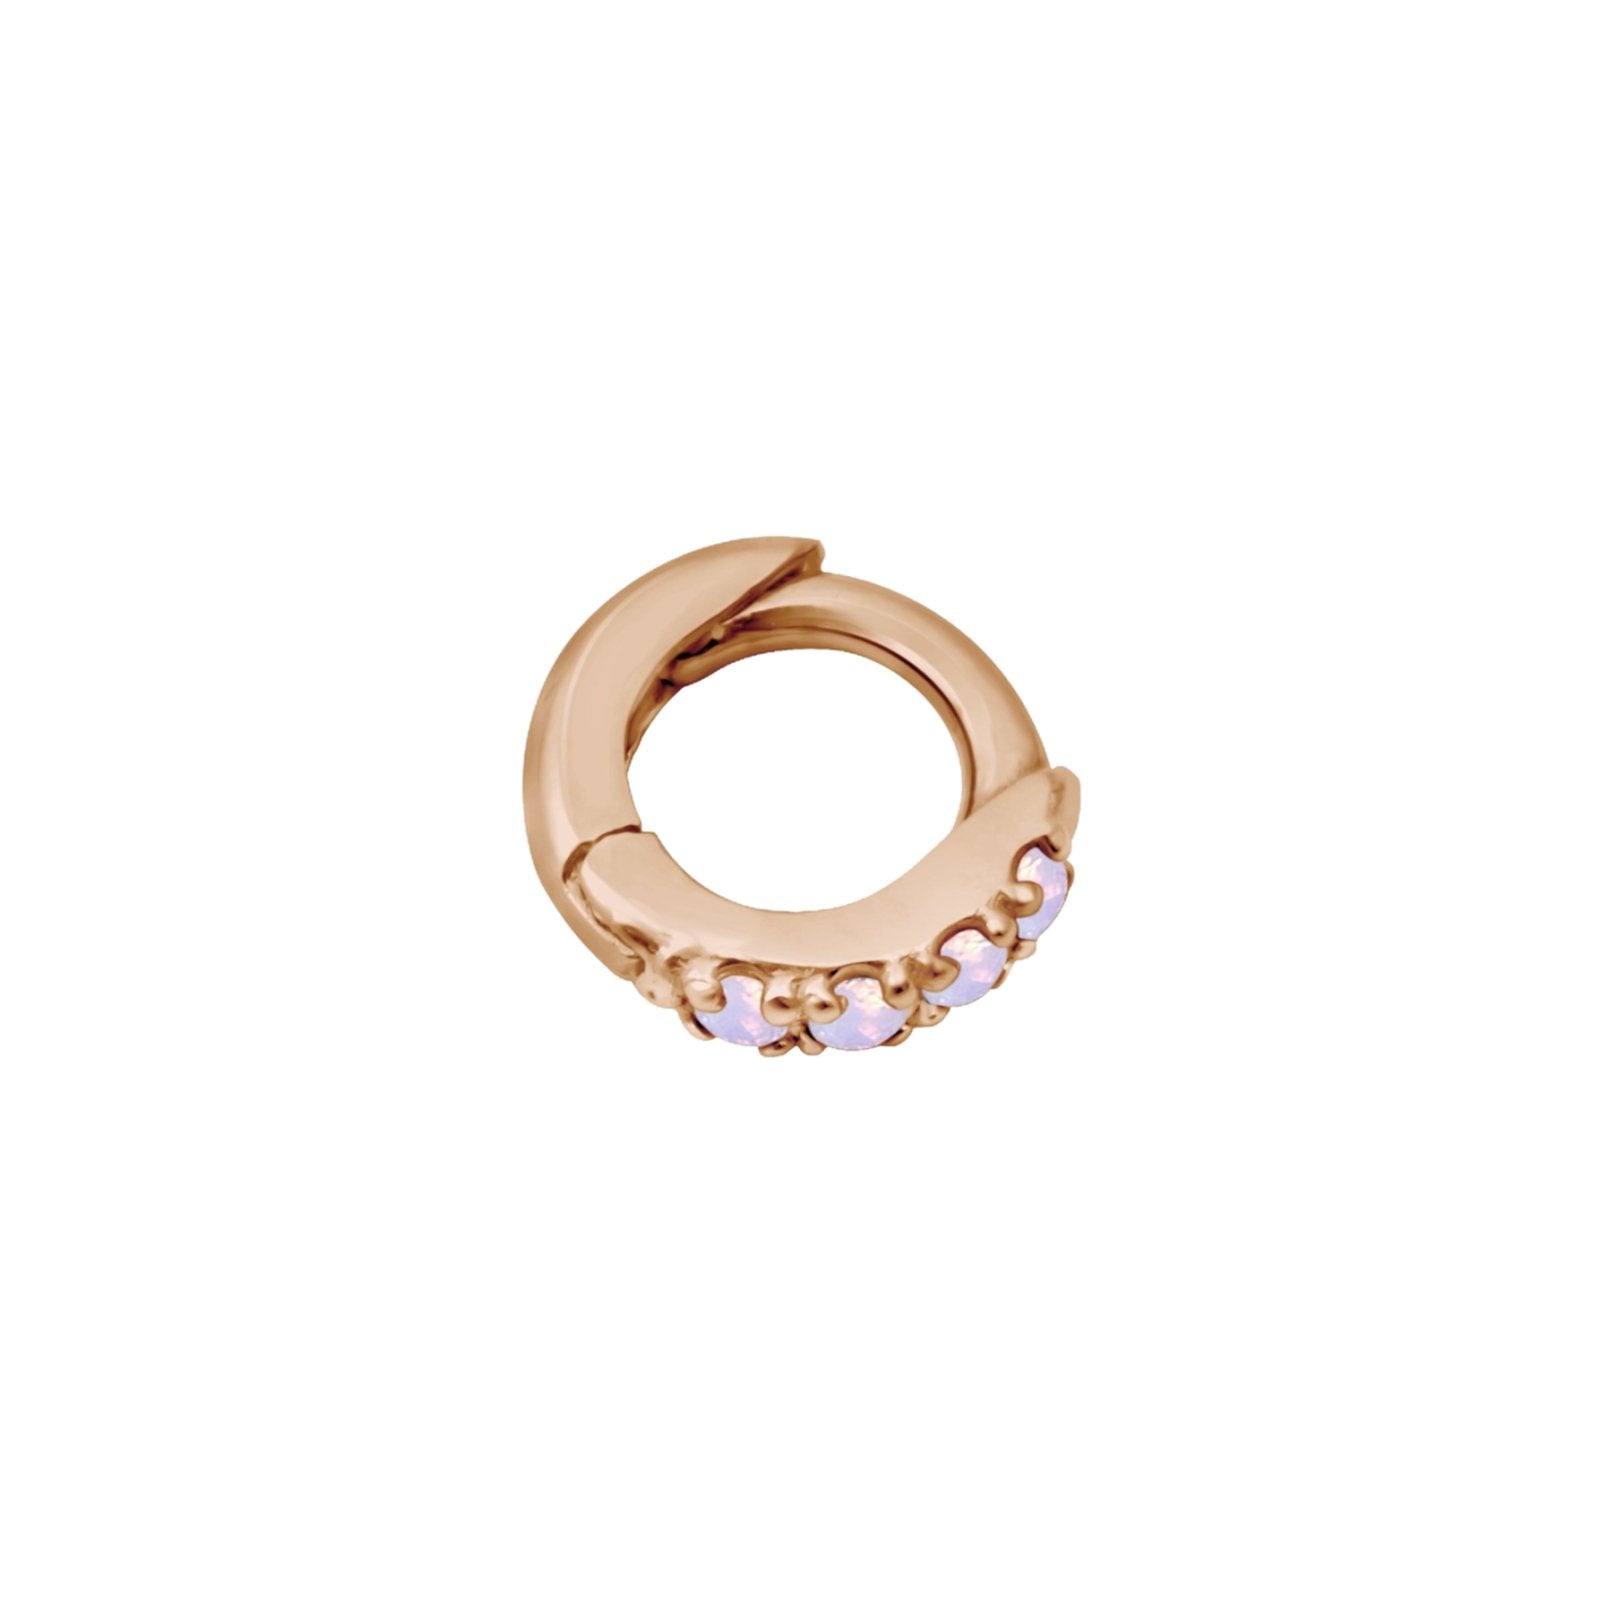 Opal Pavé Studded Huggie Earring Earrings Estella Collection #product_description# 14k Birthstone Earrings #tag4# #tag5# #tag6# #tag7# #tag8# #tag9# #tag10#